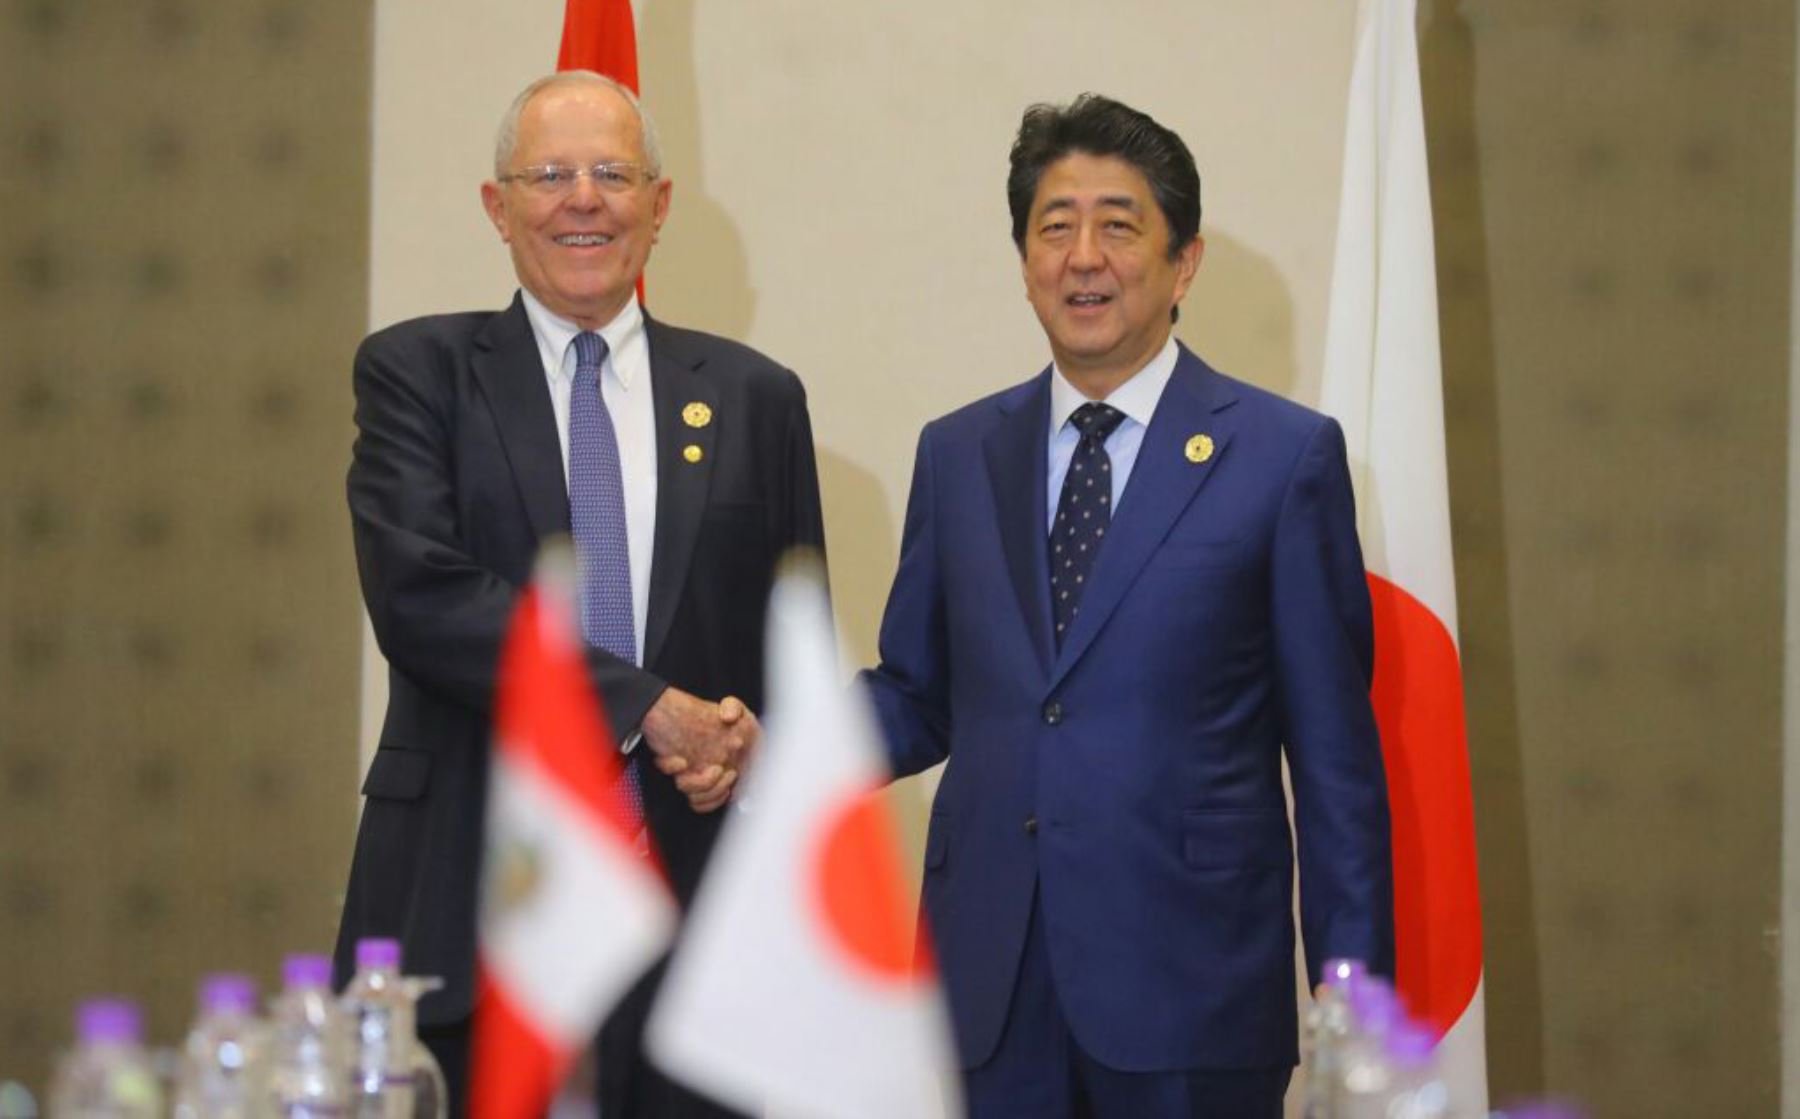 Presidente Kuczynski y primer ministro japonés, Shinzō Abe sostuvieron encuentro bilateral en APEC 2017.Foto:ANDINA/Presidencia